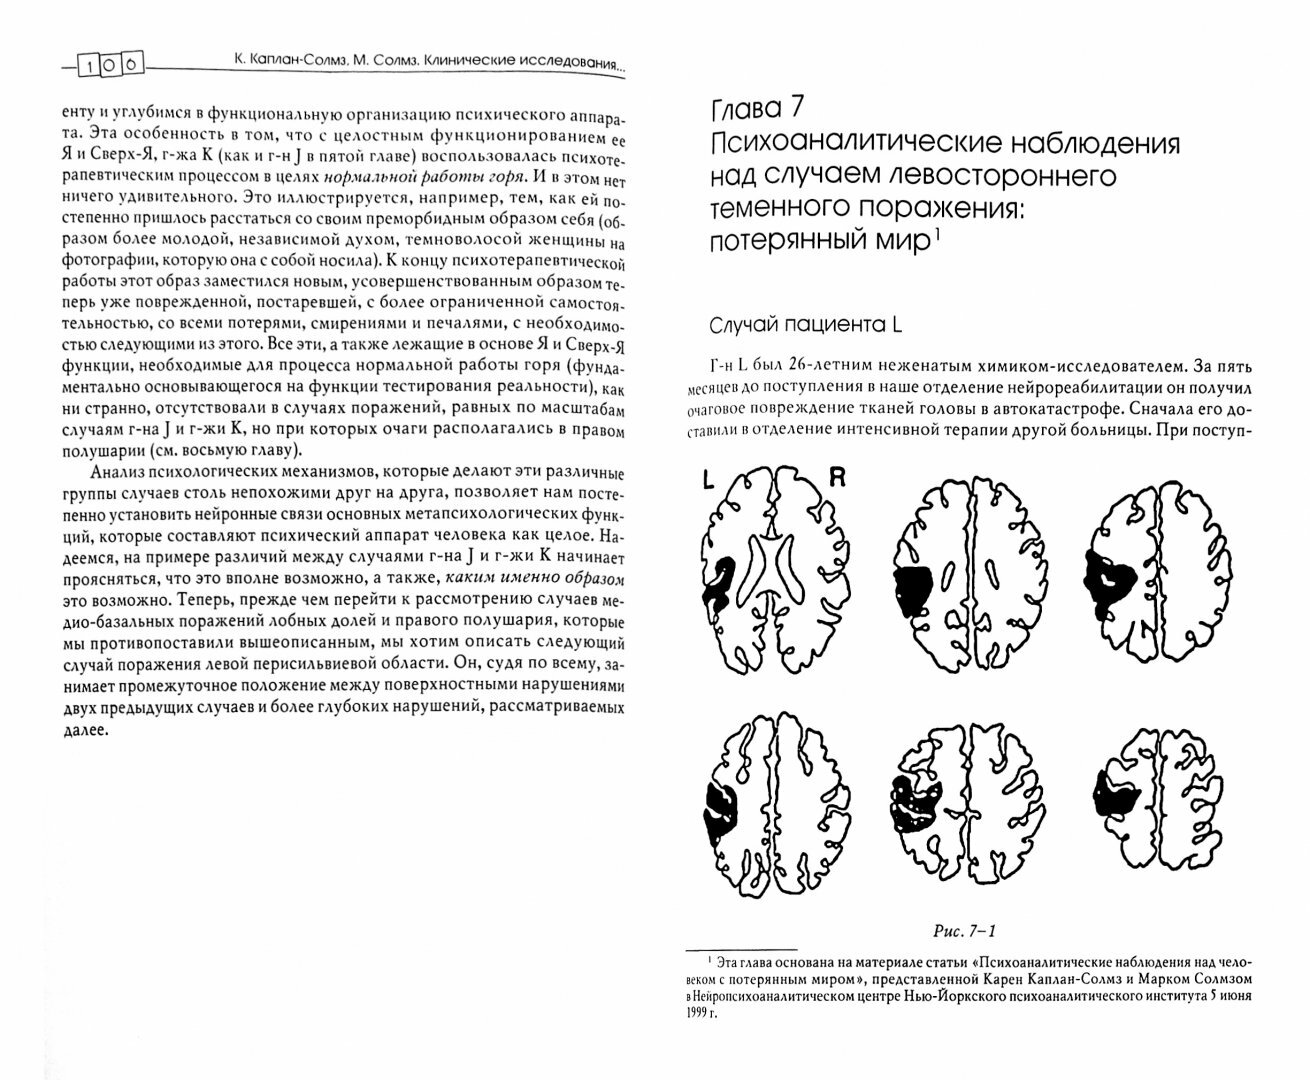 Клинические исследования в нейропсихоанализе - фото №2